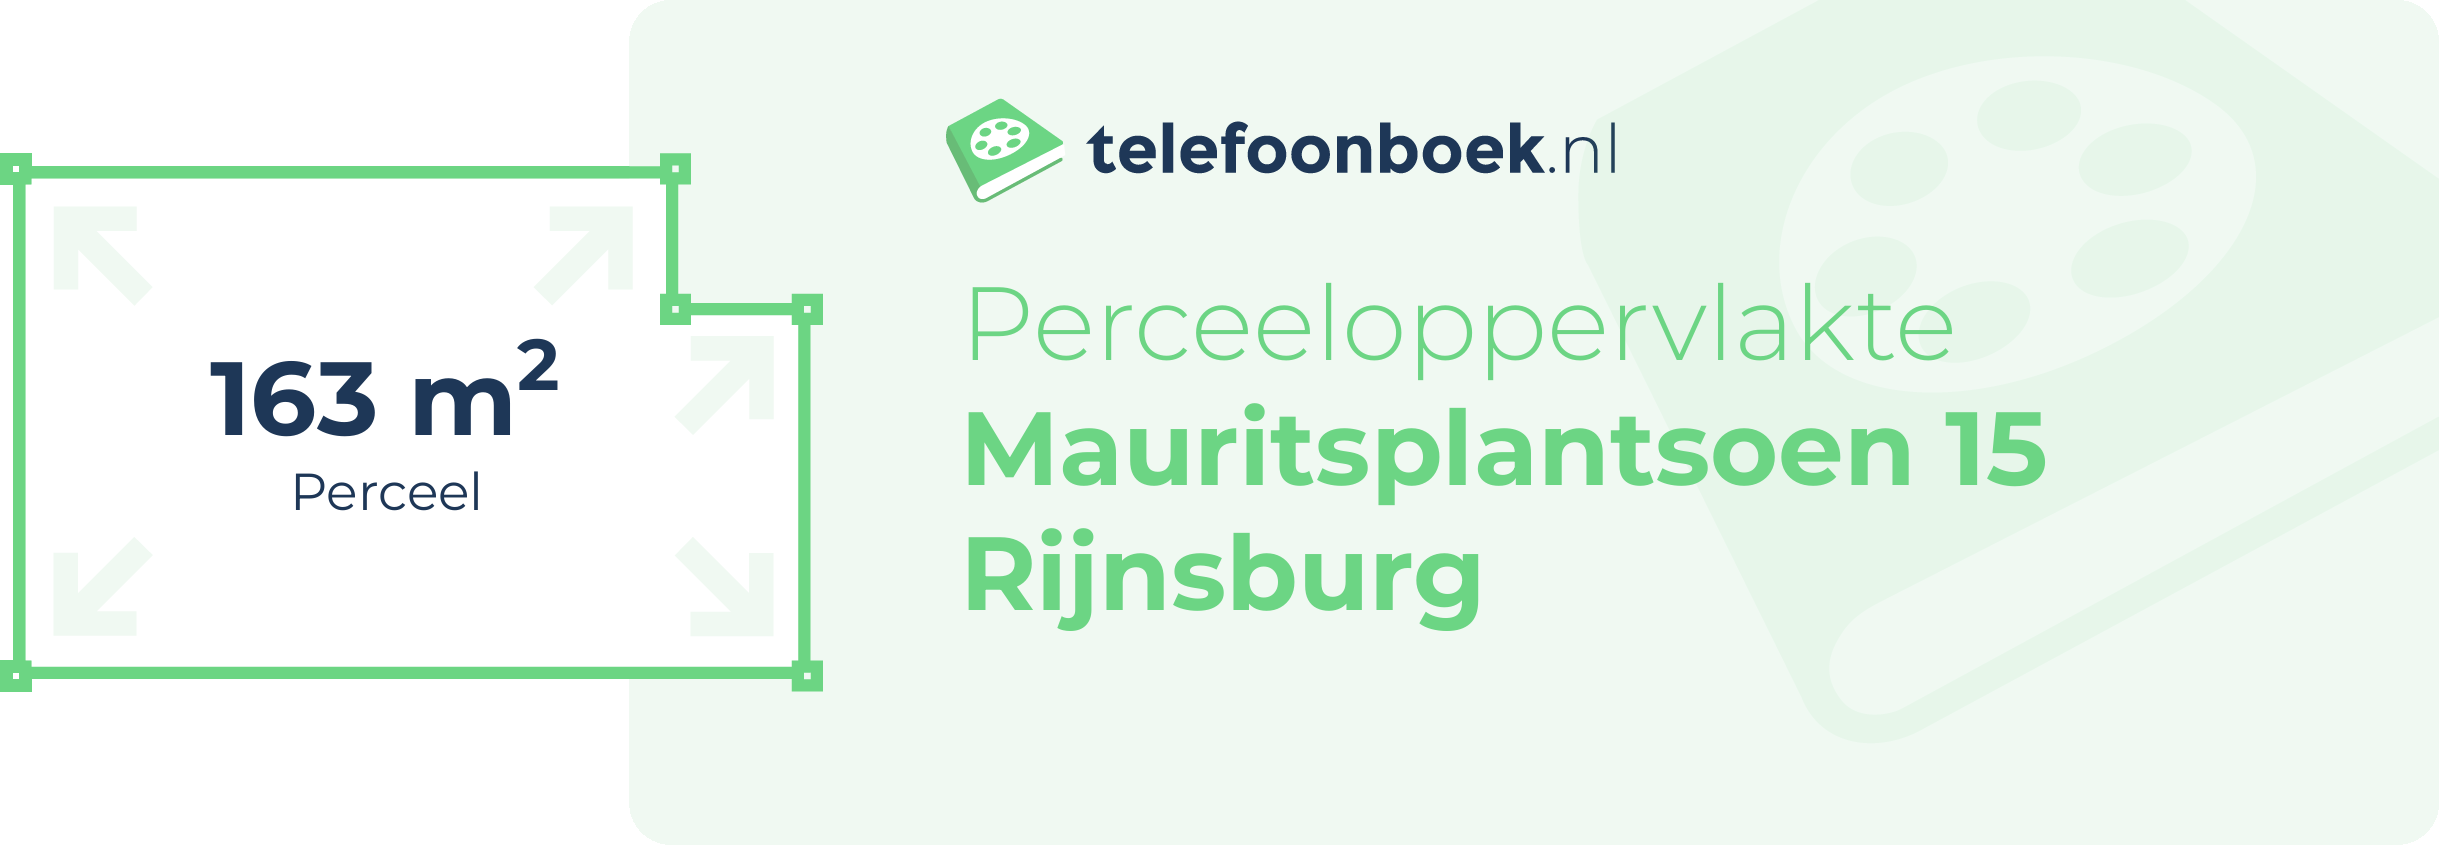 Perceeloppervlakte Mauritsplantsoen 15 Rijnsburg